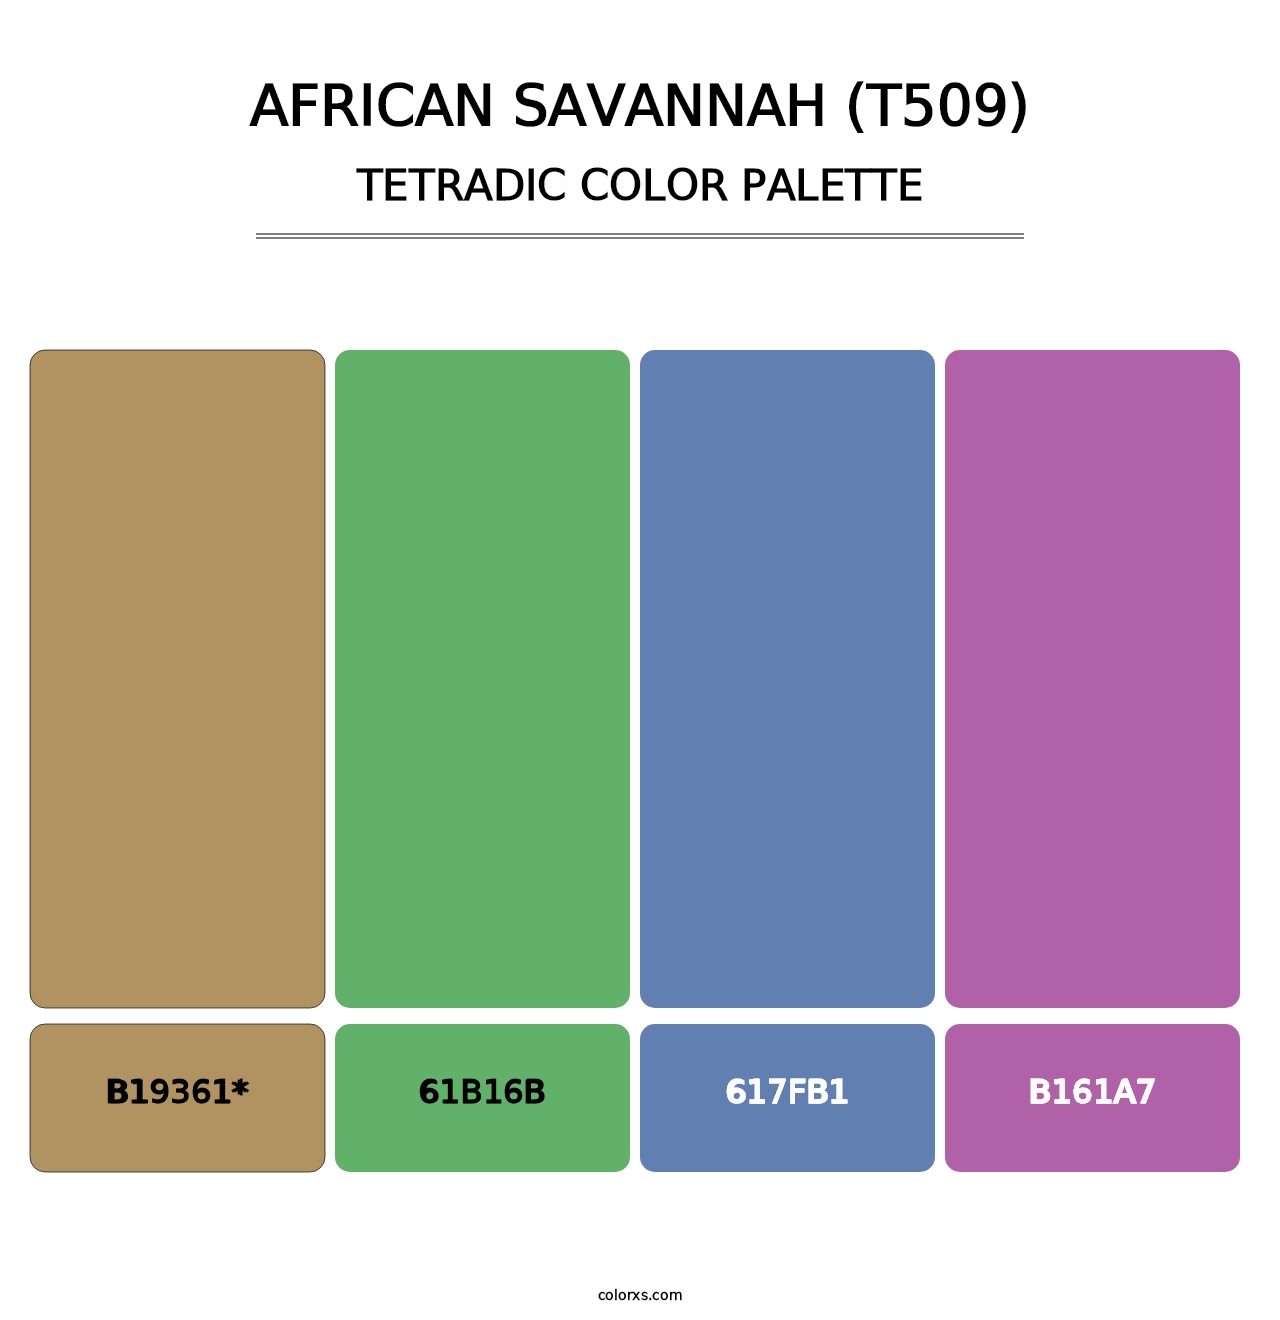 African Savannah (T509) - Tetradic Color Palette